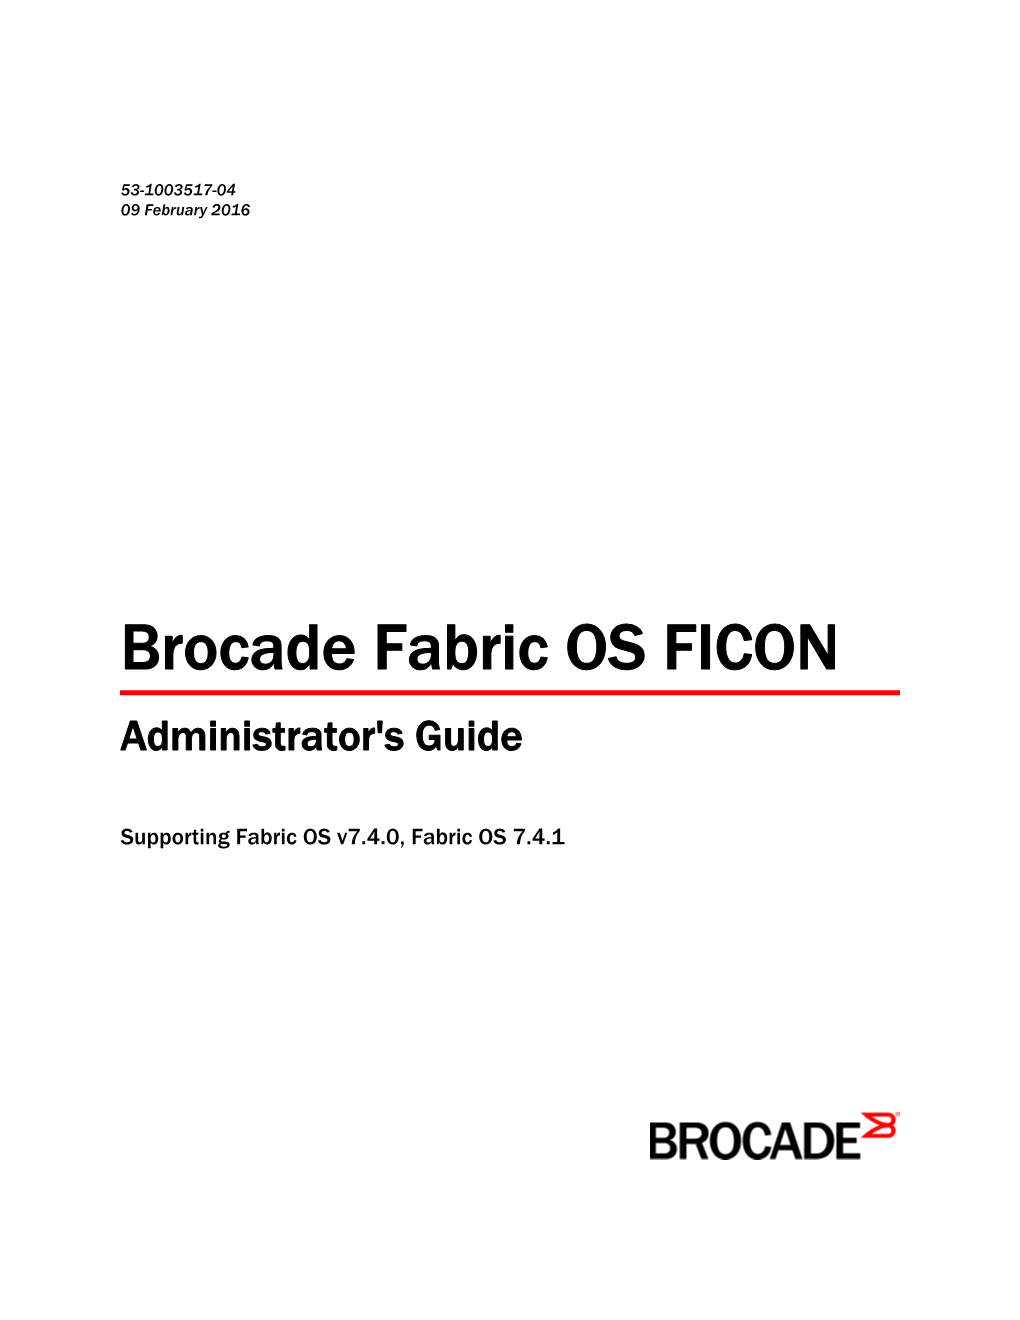 Brocade Fabric OS FICON Administrator's Guide